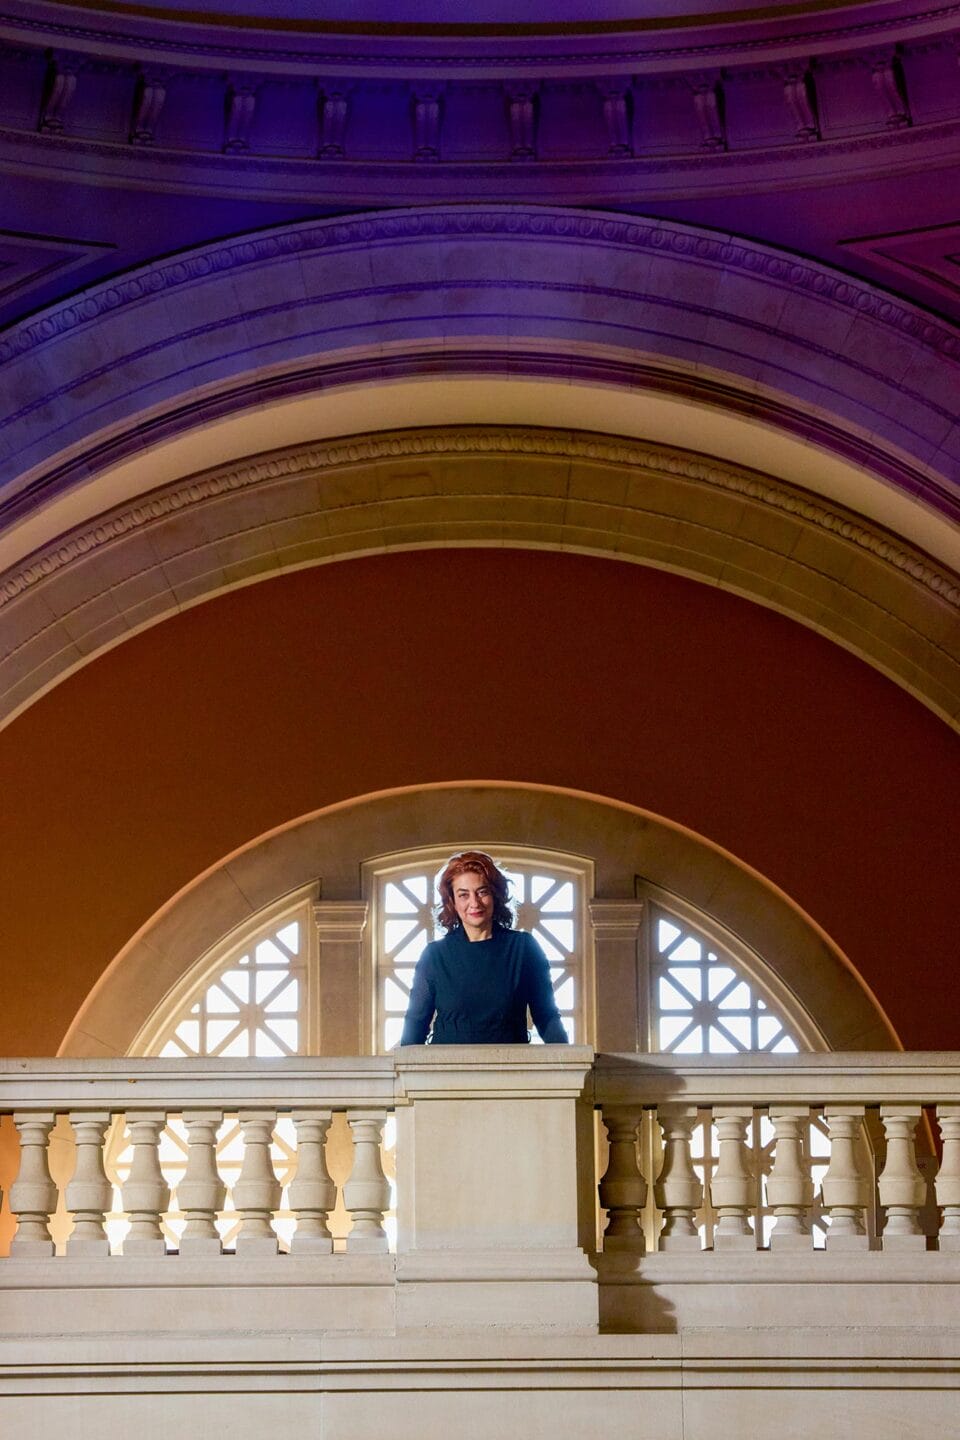 Monika Bincsik standing on the balcony in The Met's grand lobby.